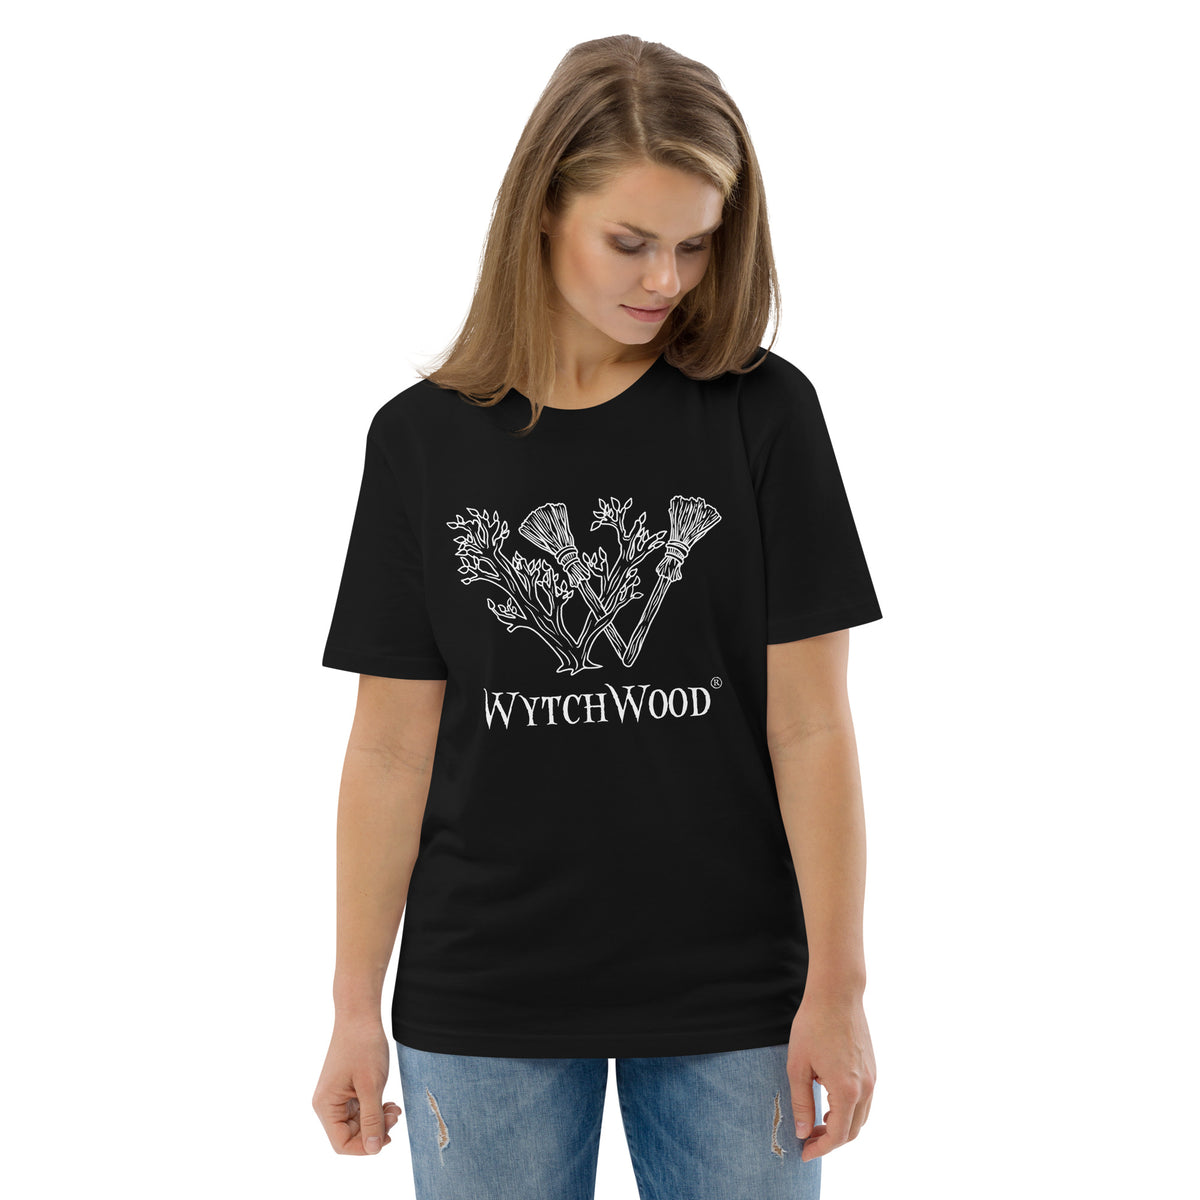 The WytchWood Coven Unisex Organic Cotton T-Shirt